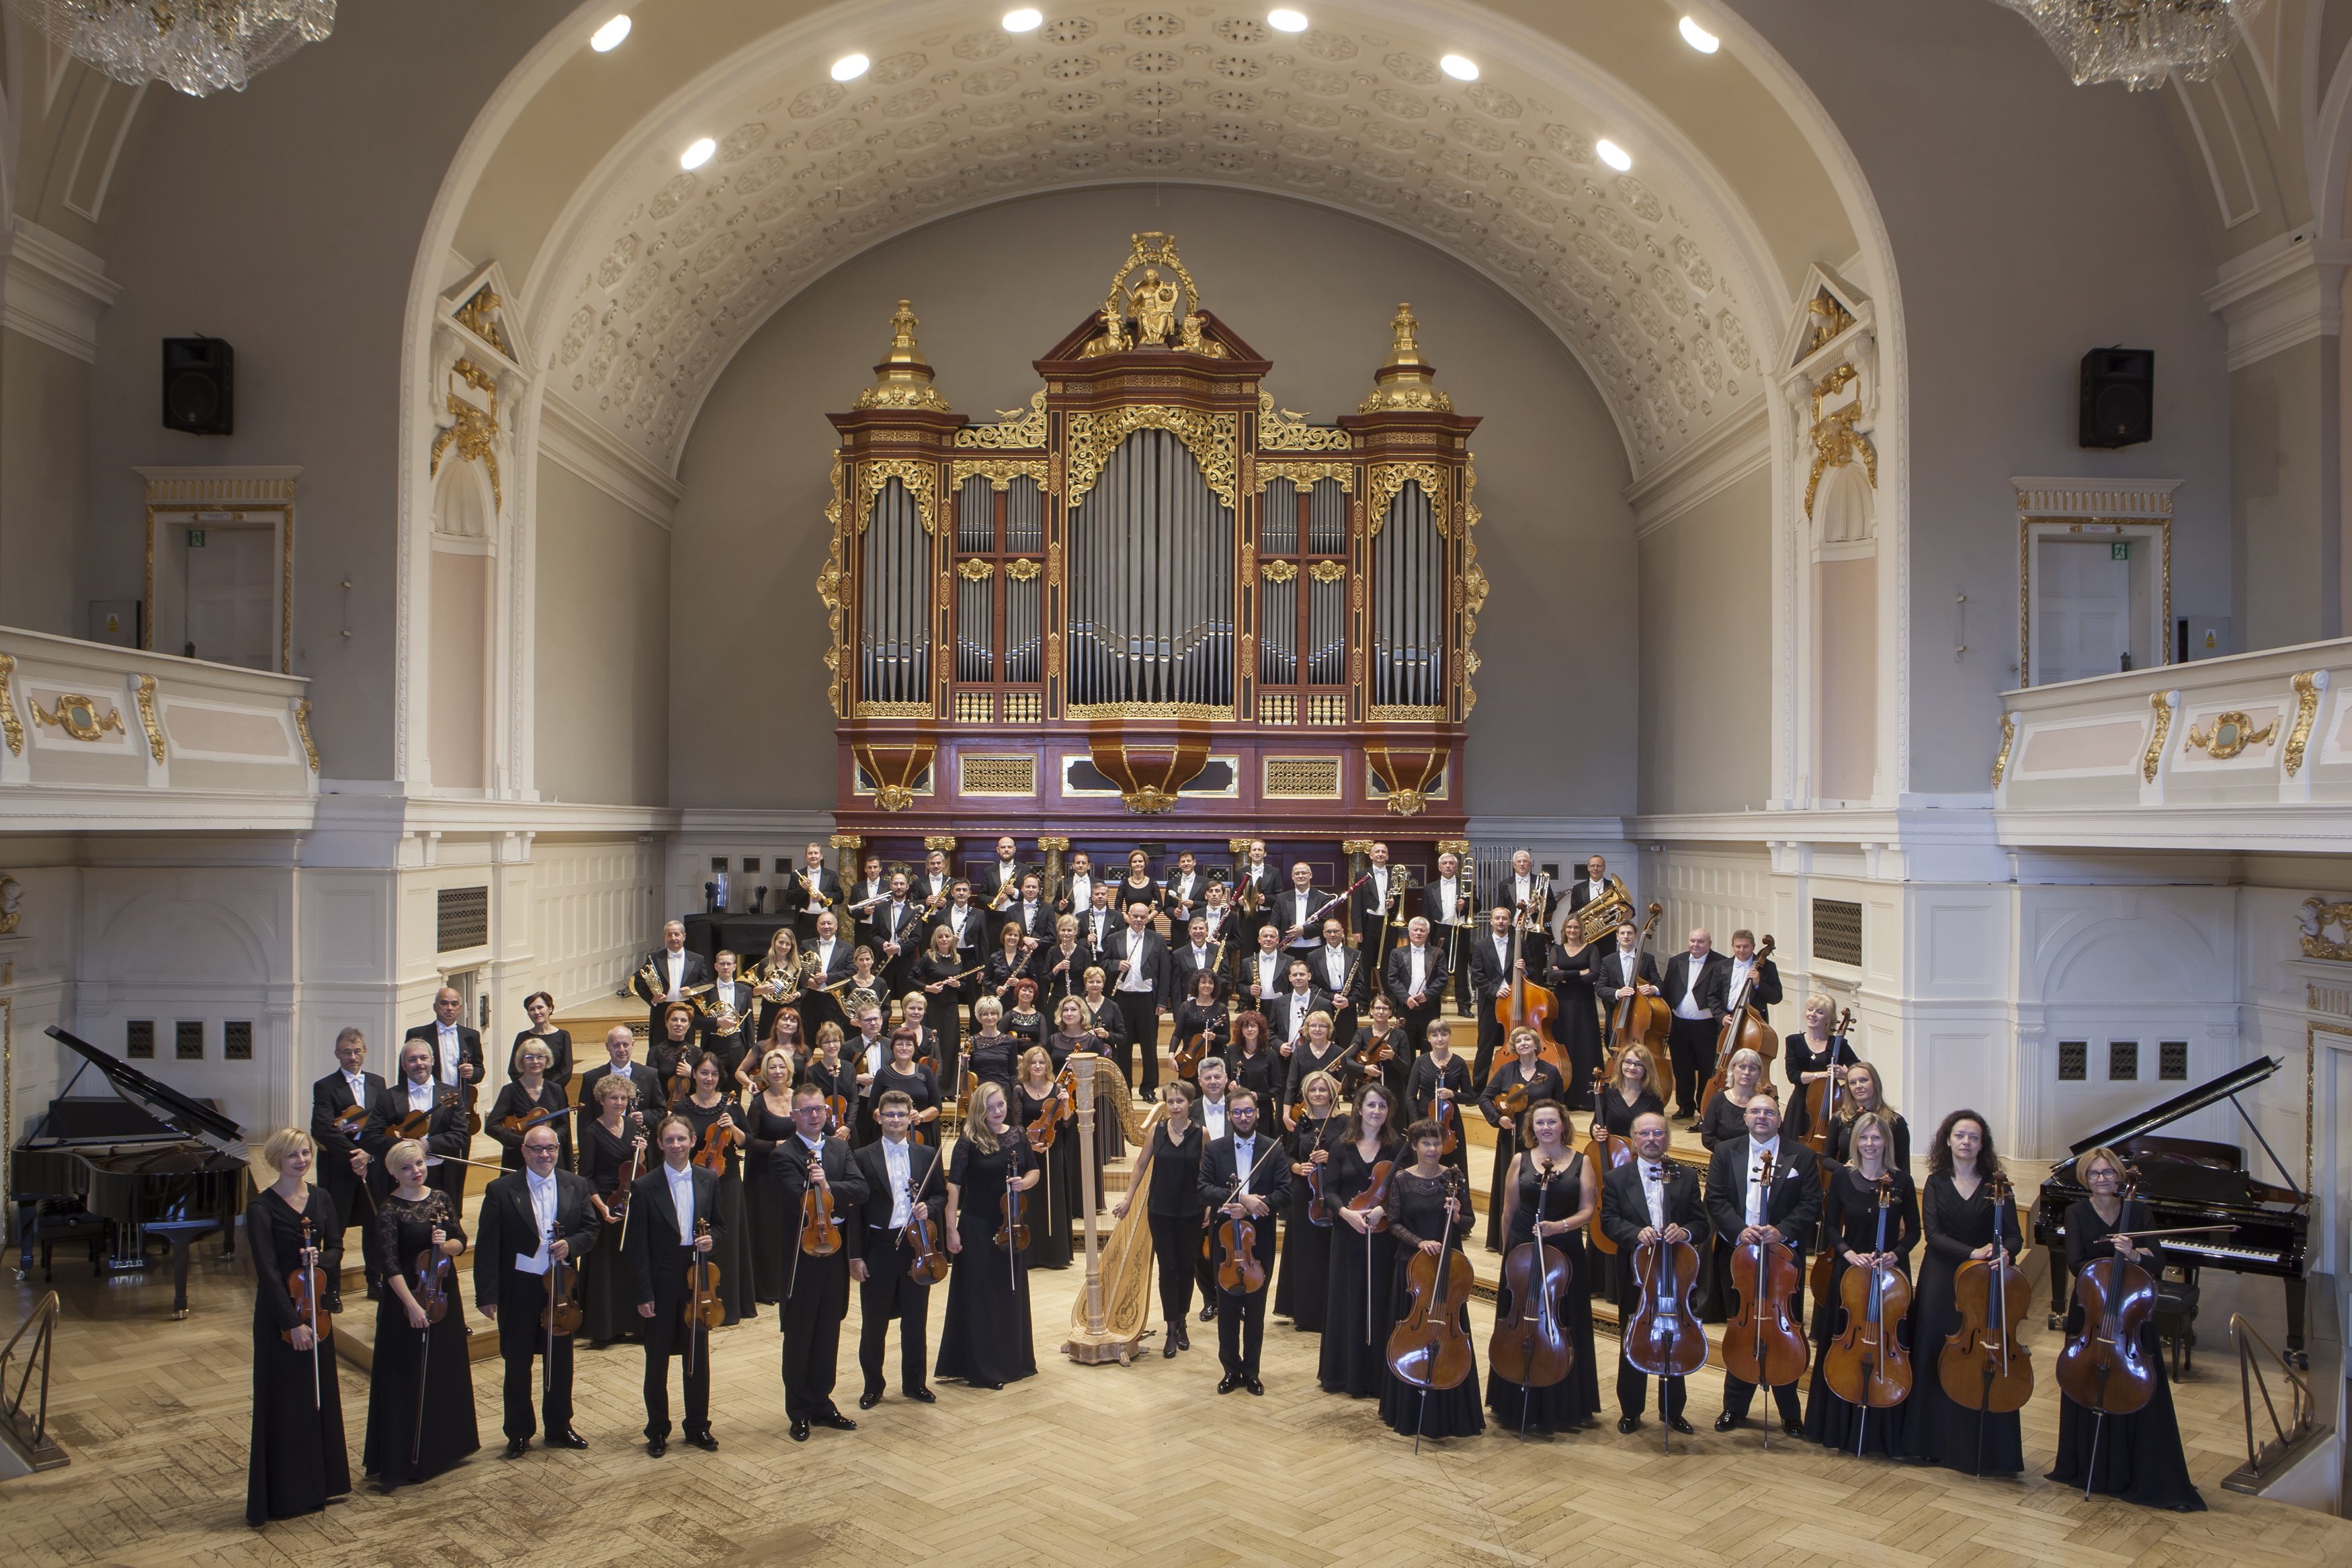 orkiestra-filharmonii-poznanskiej-fot.-piotr-skornicki-20170918-_mg_8238-1